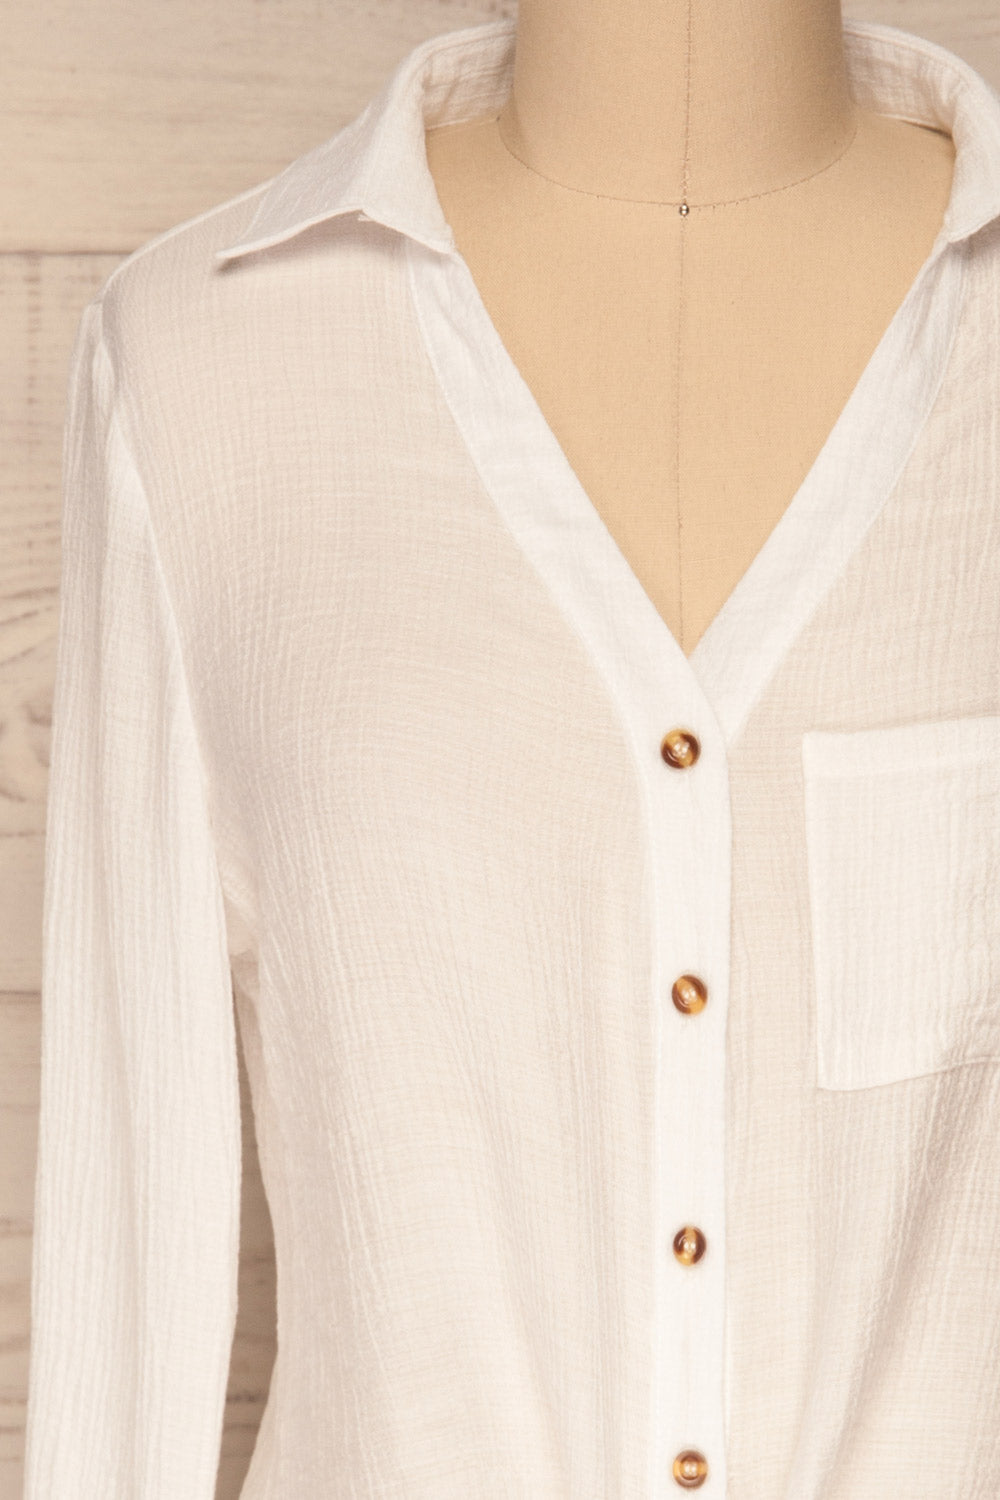 Cayambe Blanc White Crepe Button-Up Shirt | La Petite Garçonne front close-up